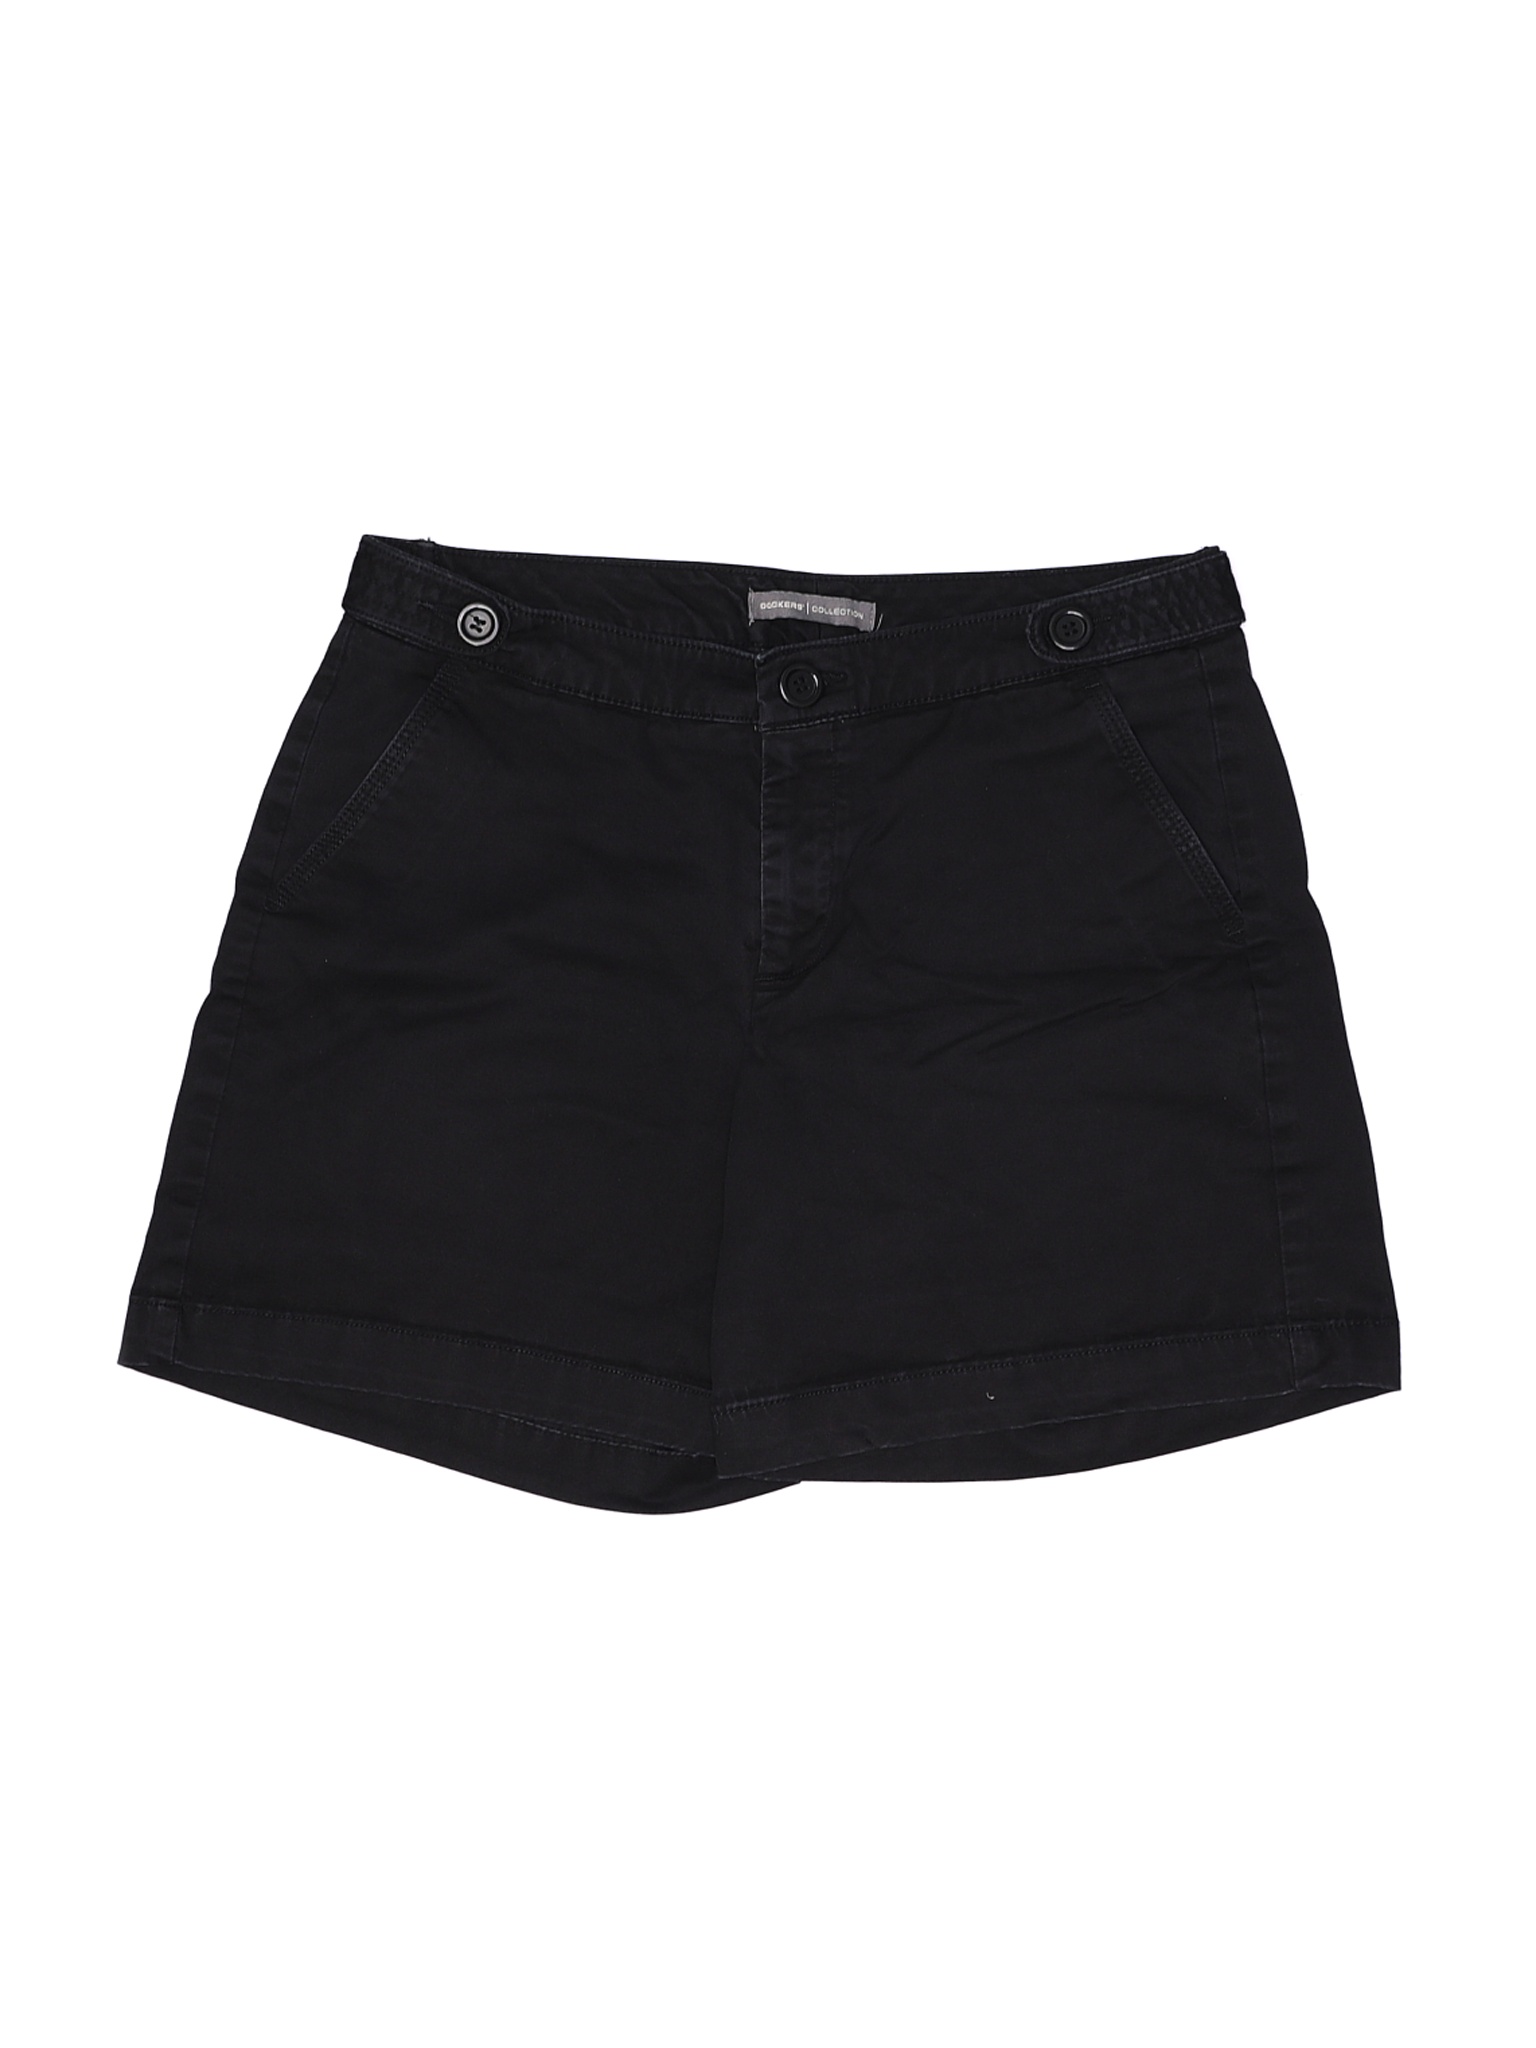 Assorted Brands Women Black Khaki Shorts 4 | eBay